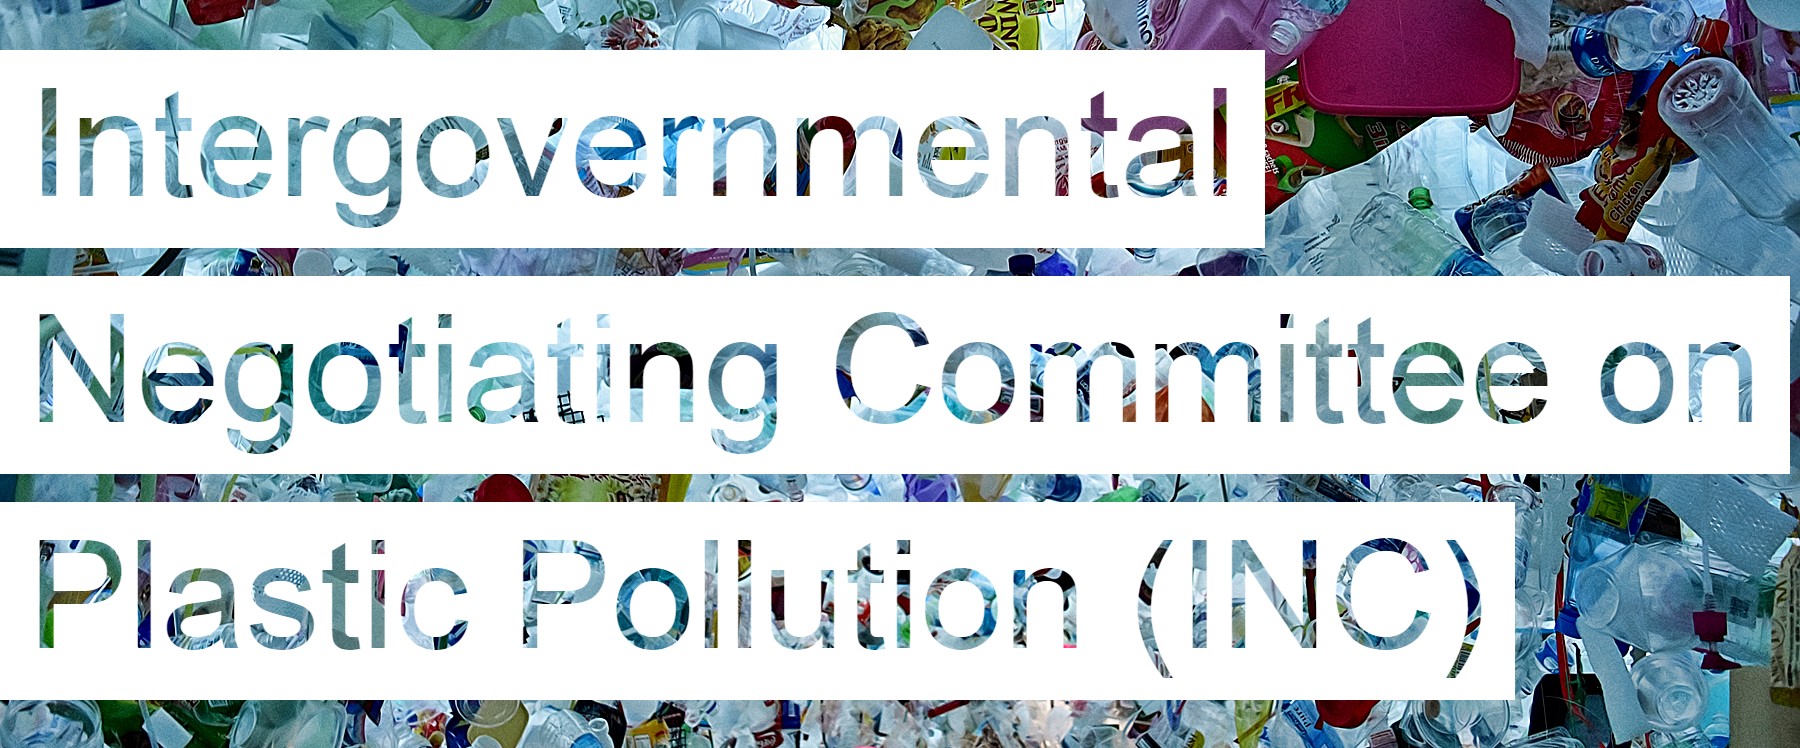 Intergovernmental Negotiating Committee on Plastic Pollution illustration image